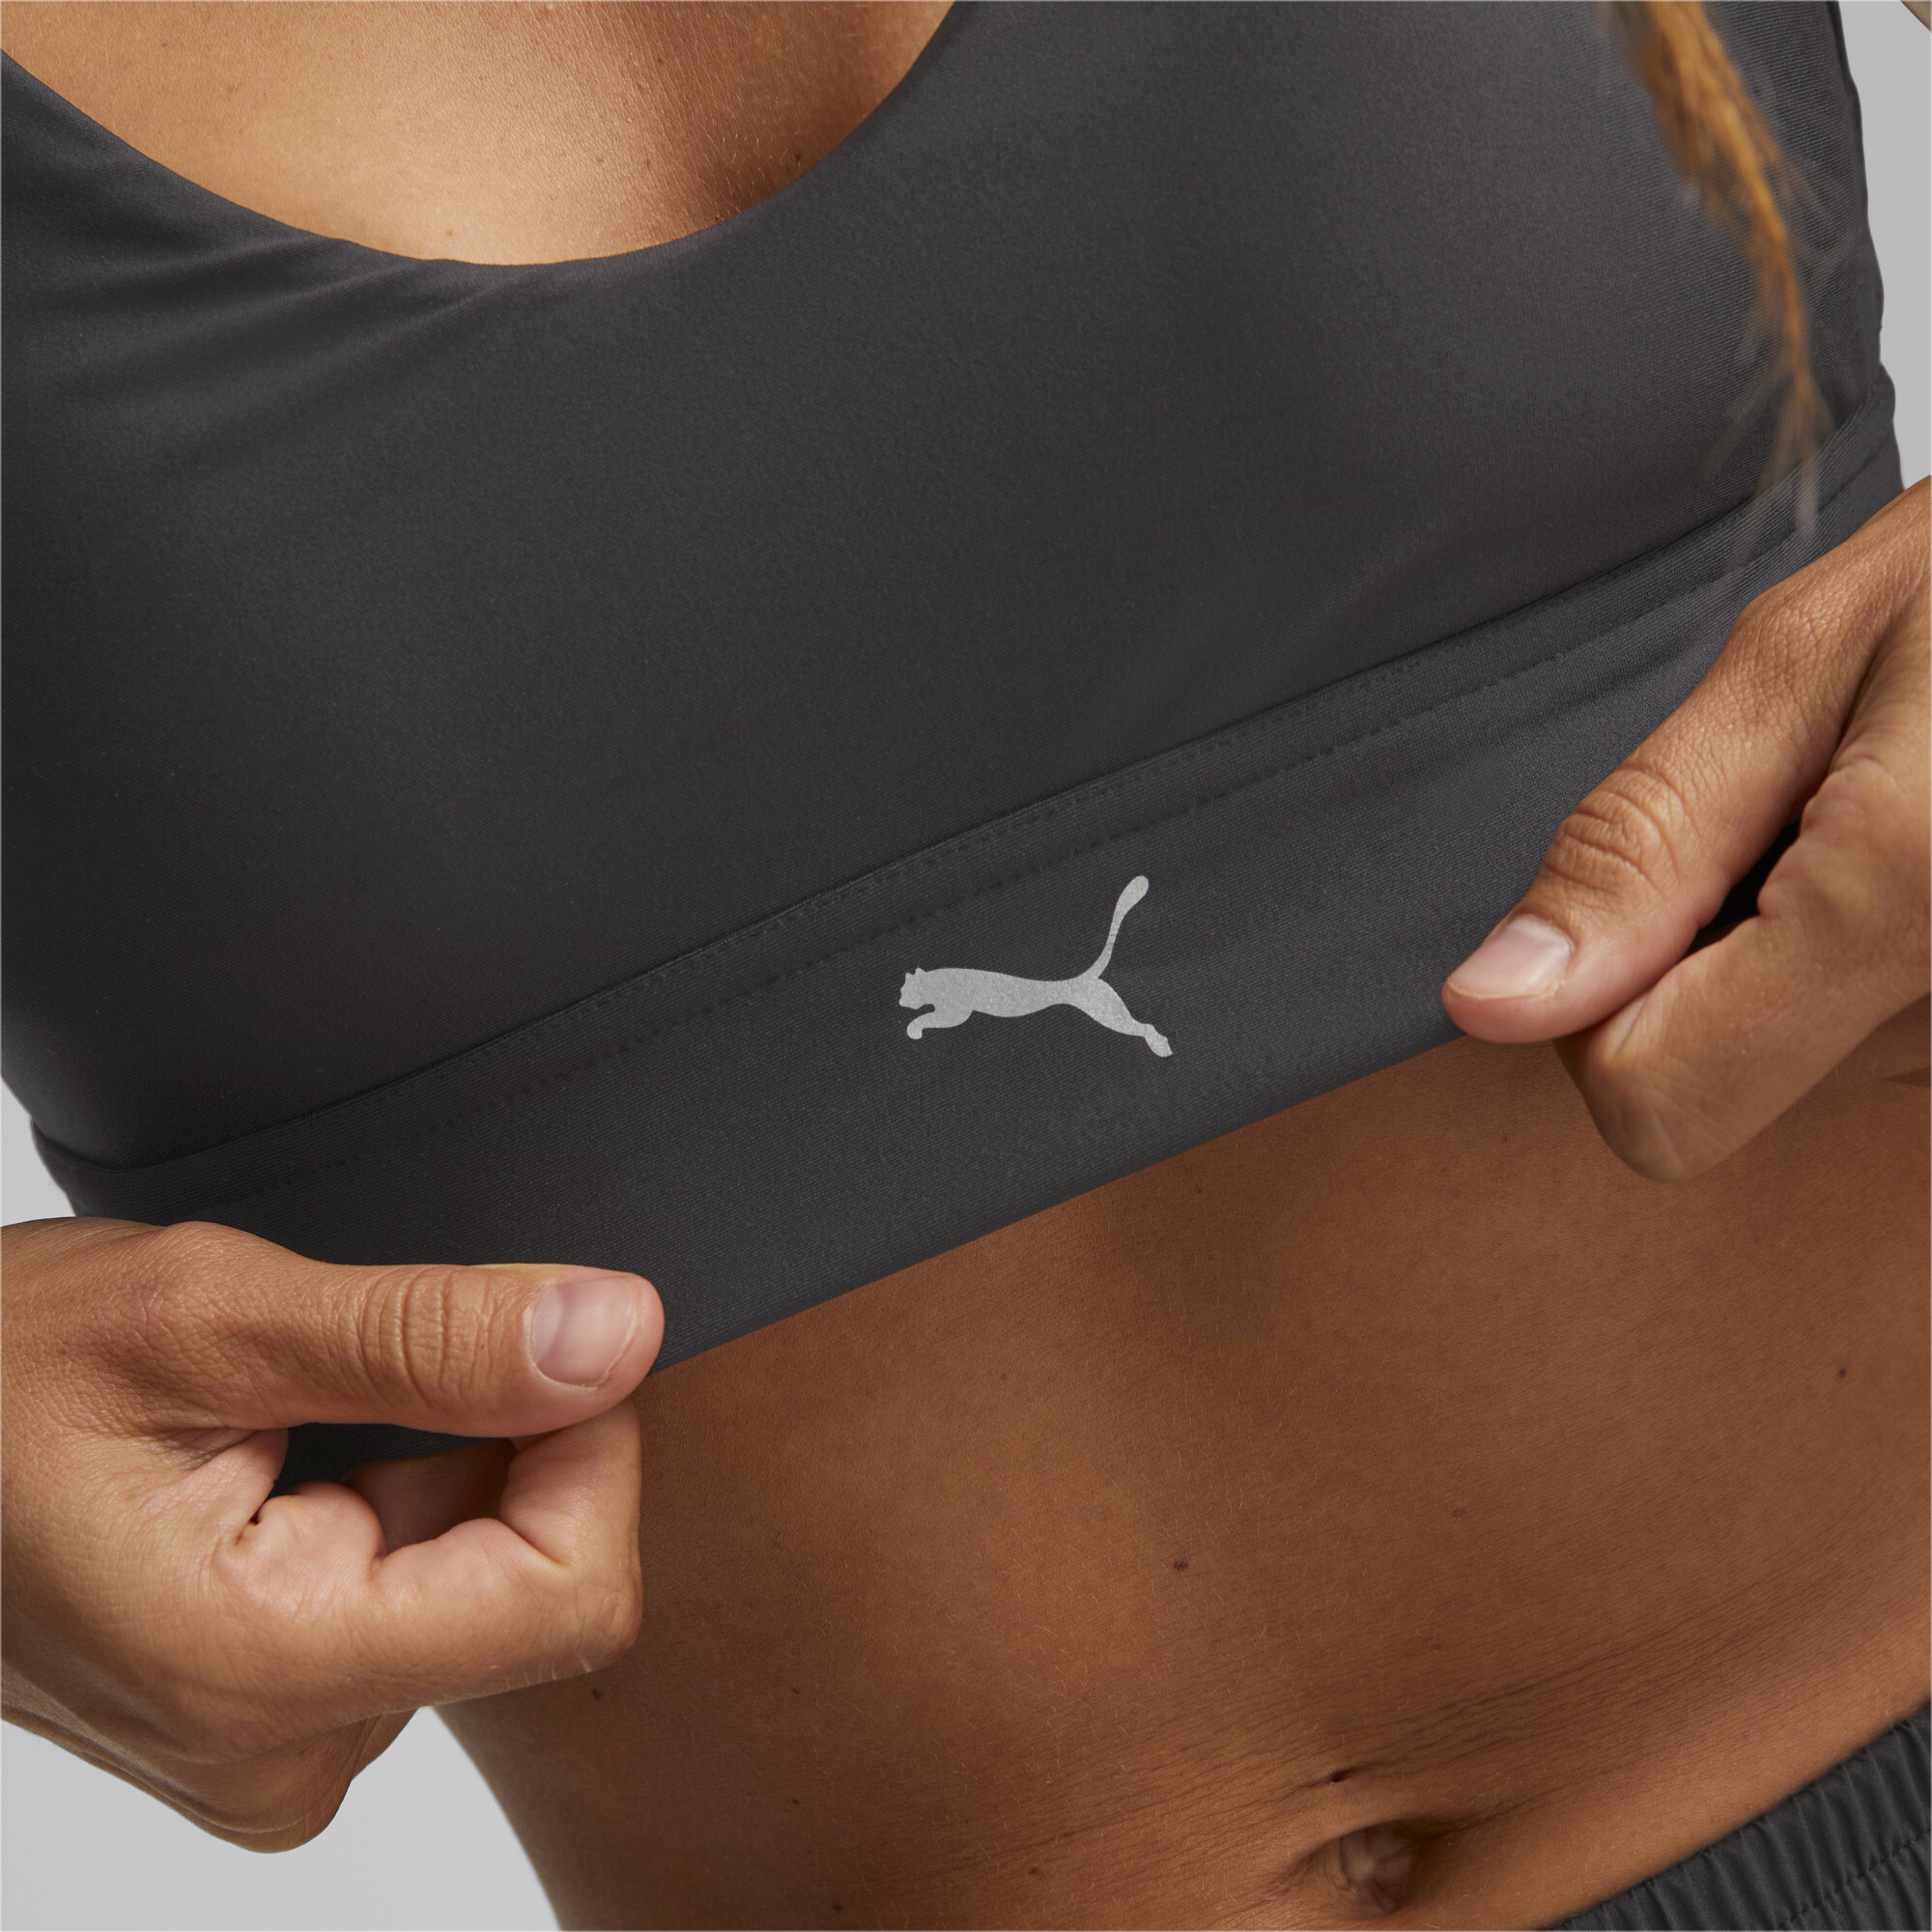 Women's PUMA High Support Ultraform Running Bra In 10 - Black, Size Medium